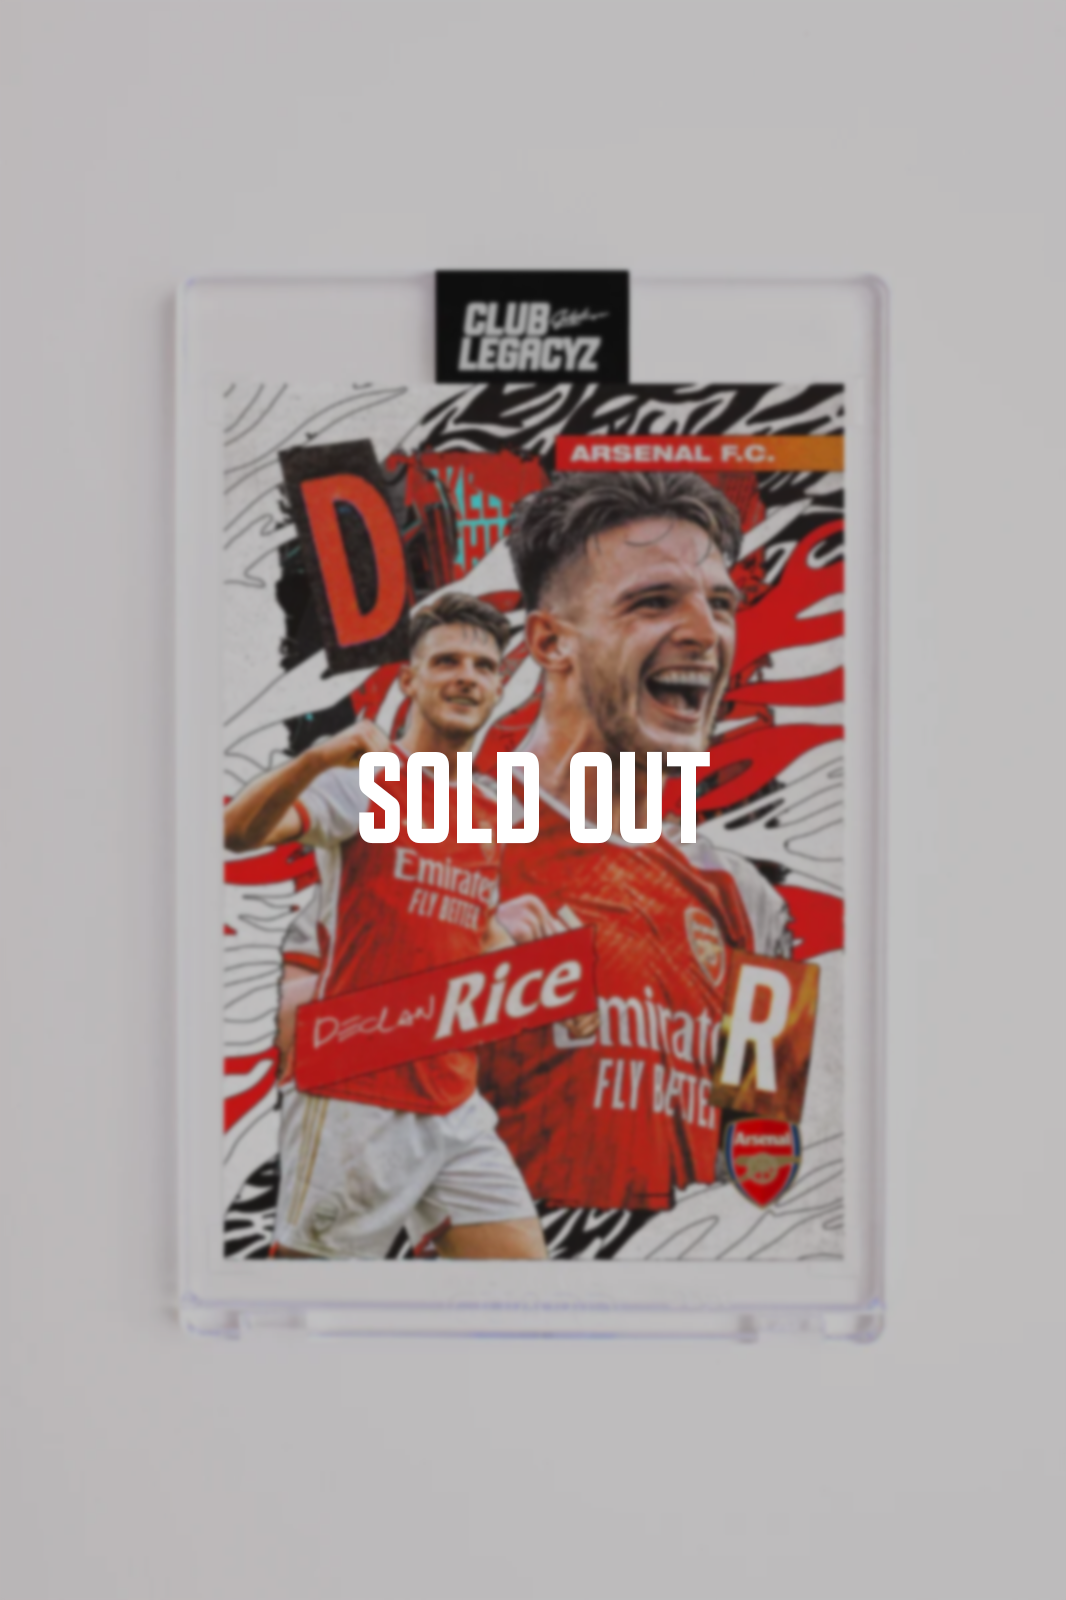 Arsenal FC - Icon Declan Rice 50 exemplaires